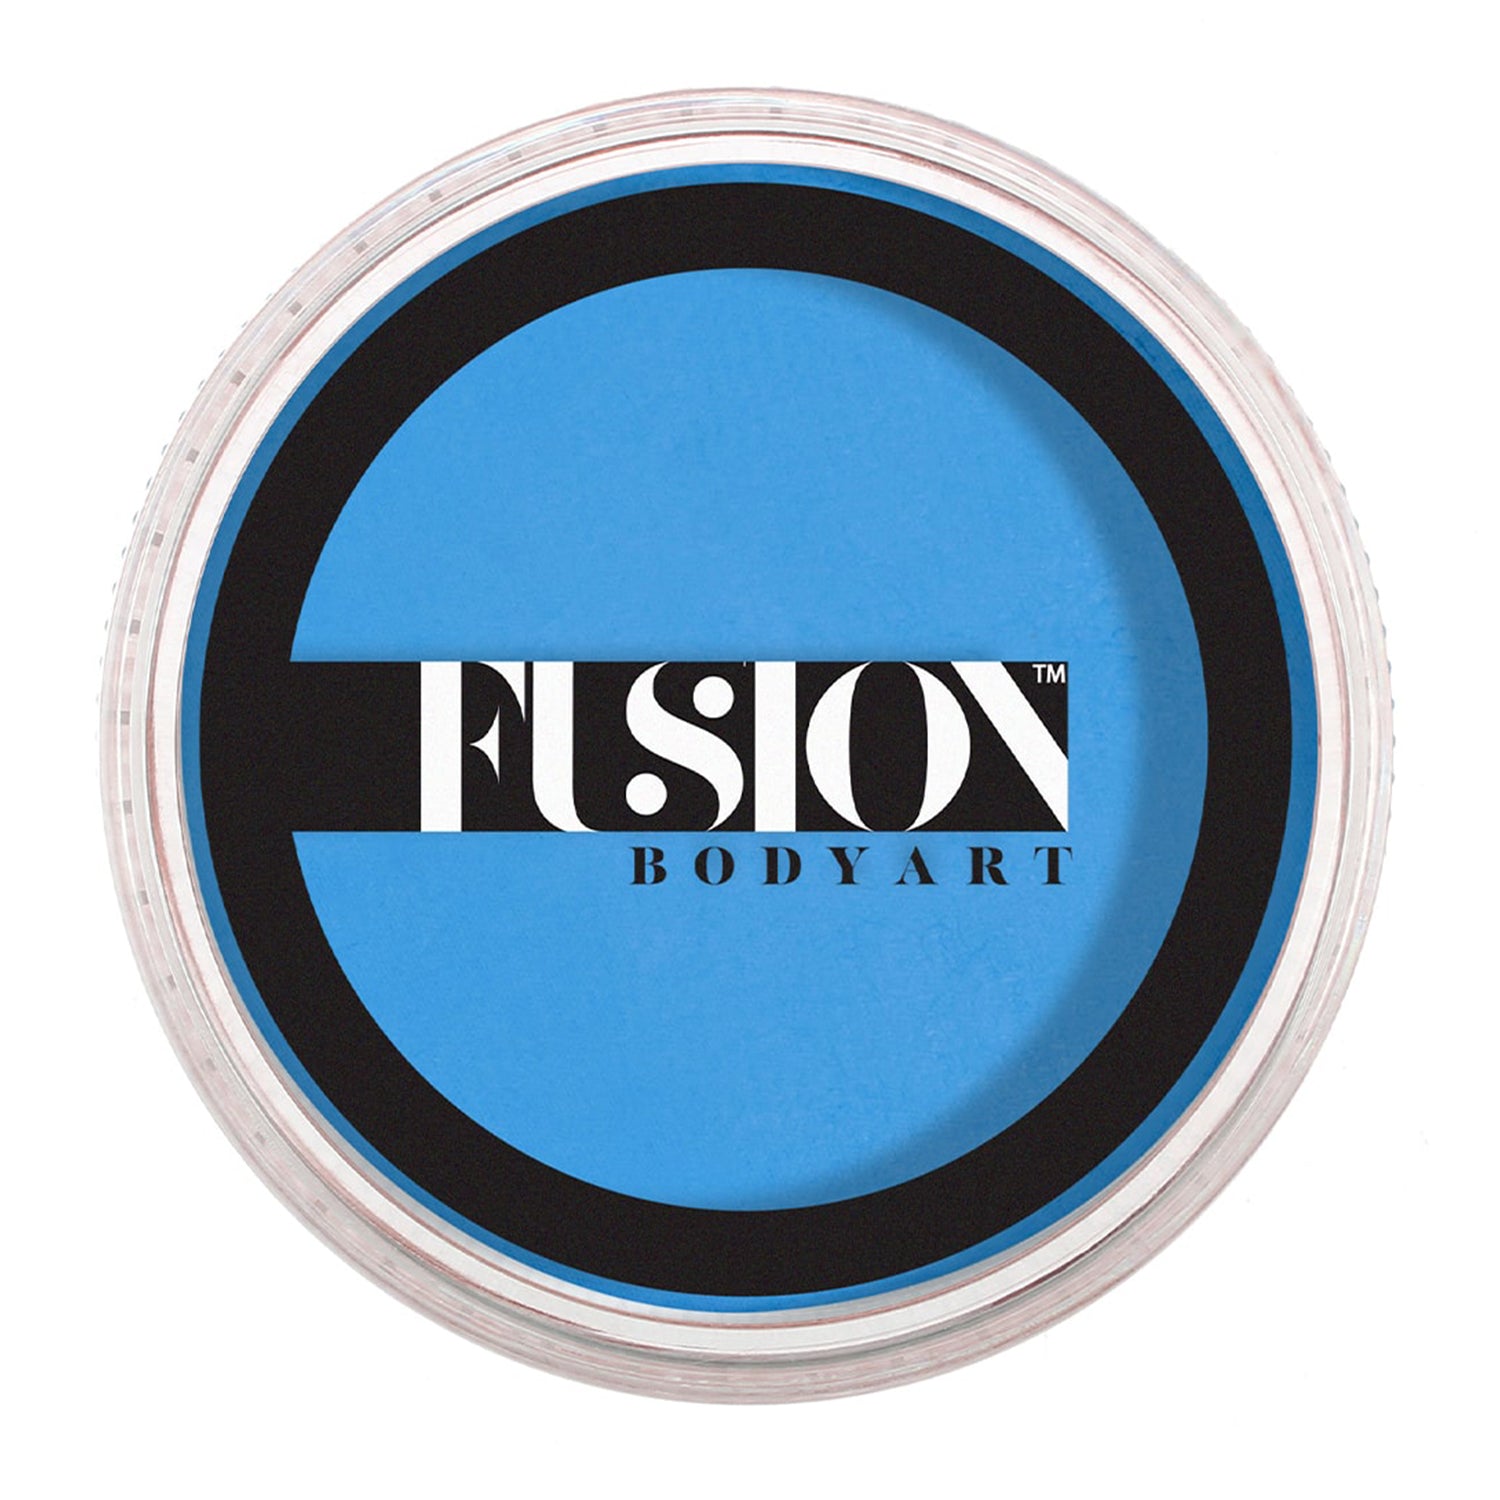 Fusion Body Art Face & Body Paint - Prime Glacial Blue